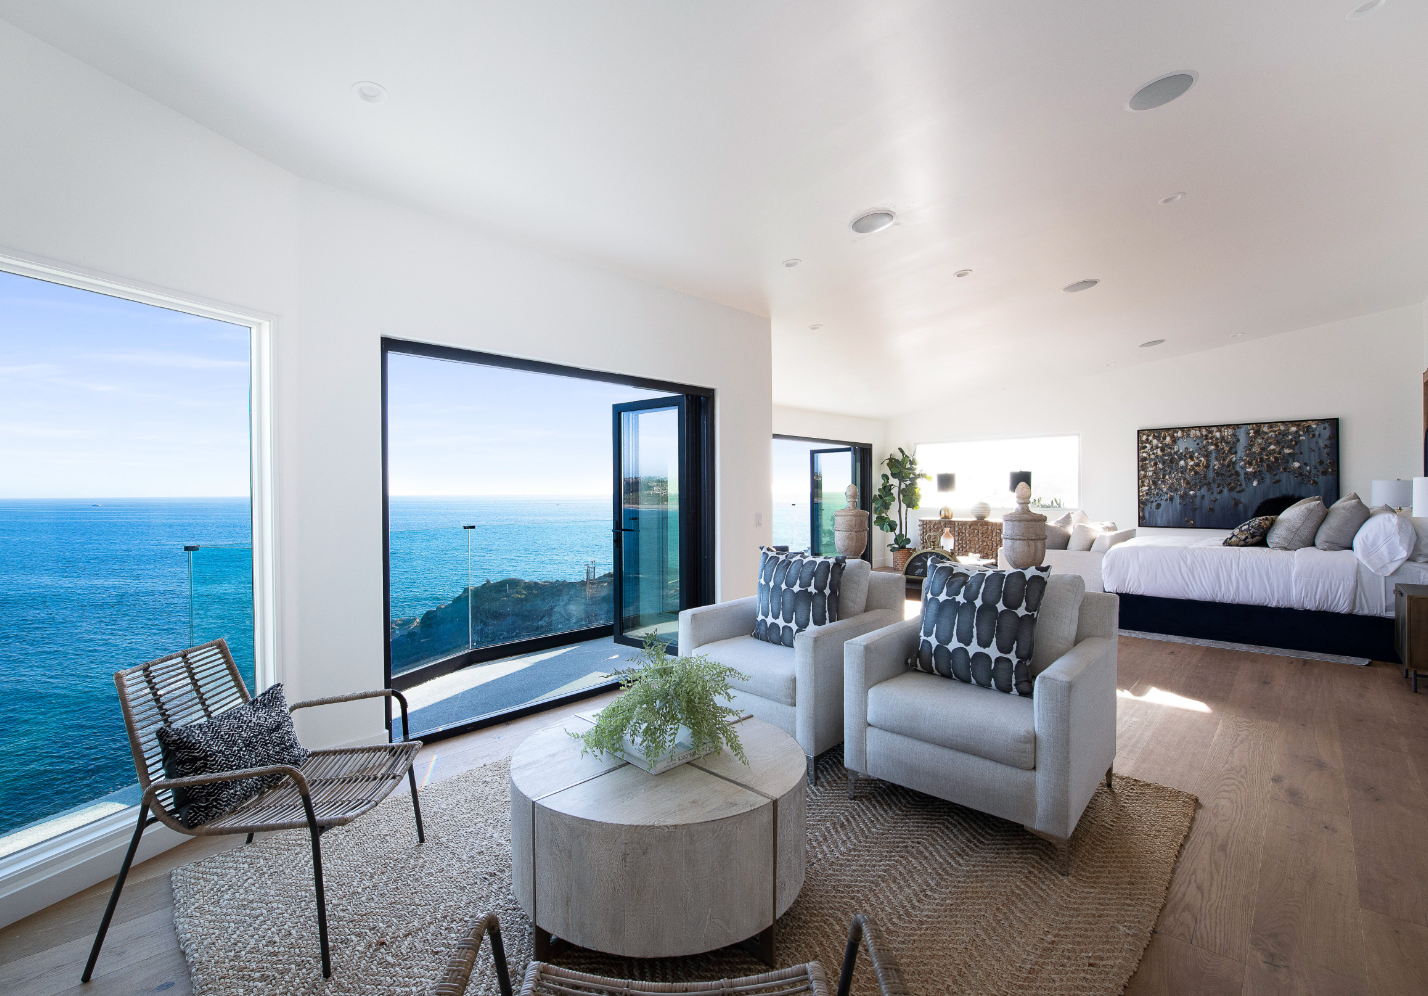 Design & Build your dream home in Laguna Beach, CA